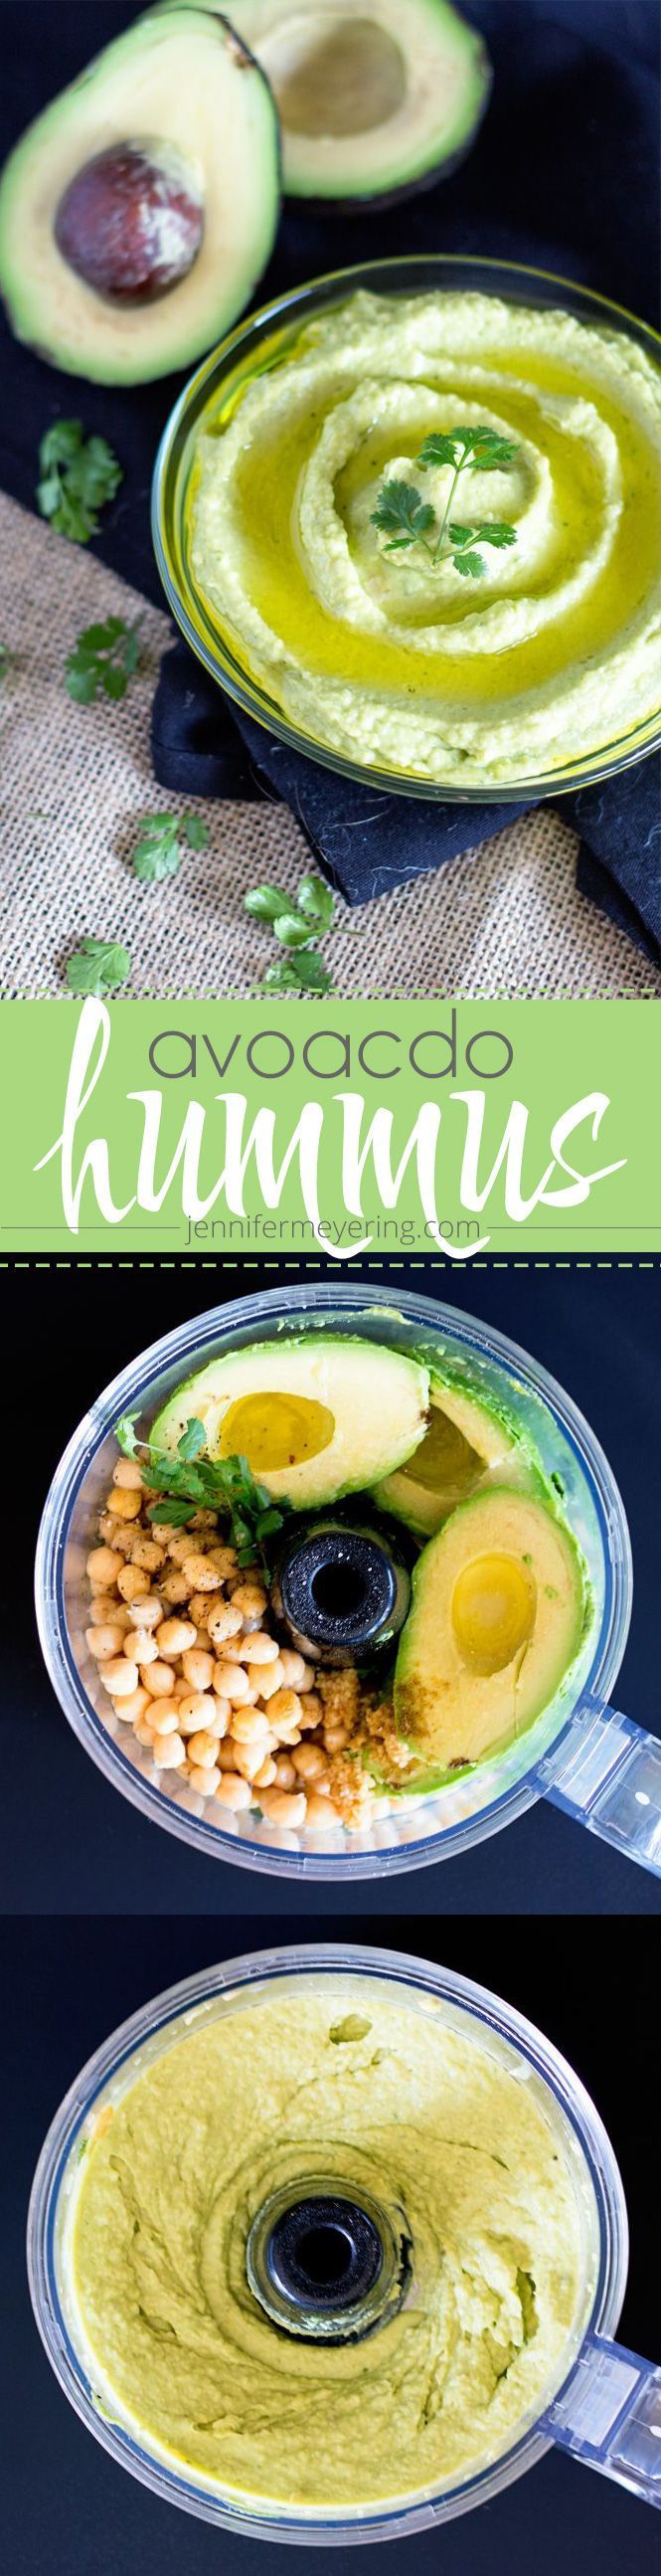 Avocado Hummus | JenniferMeyering.com